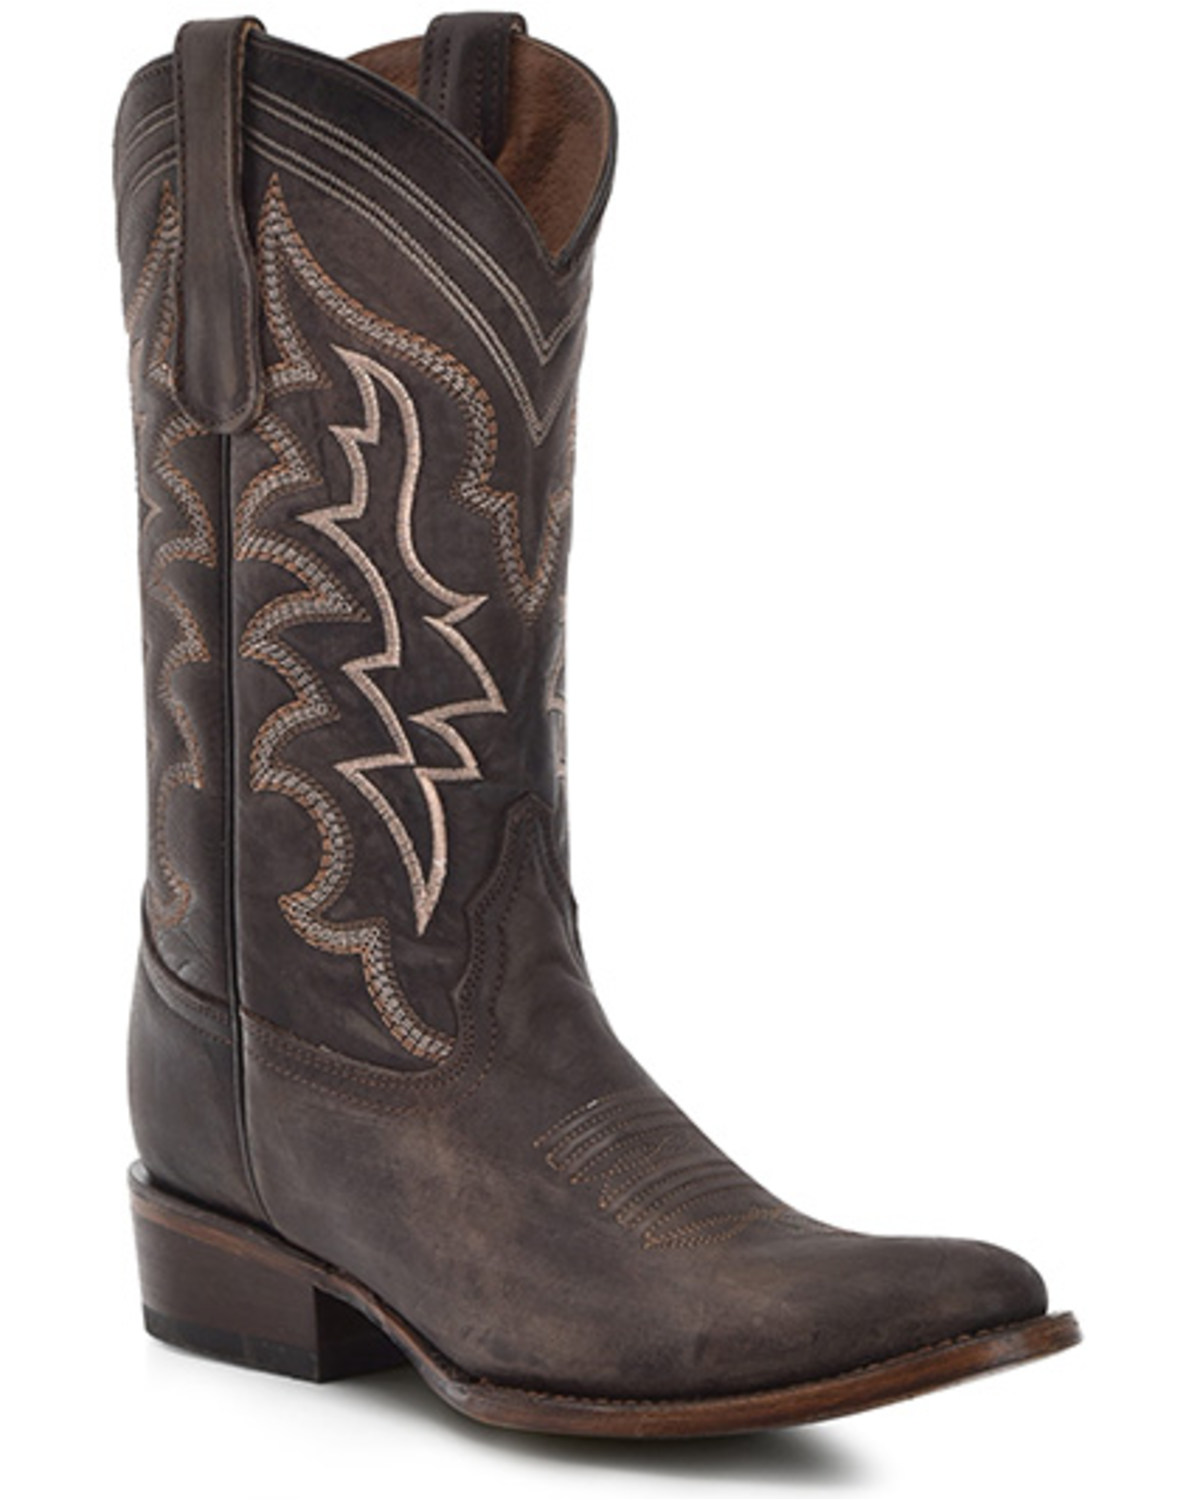 Corral Men's Distressed Western Boots - Medium Toe